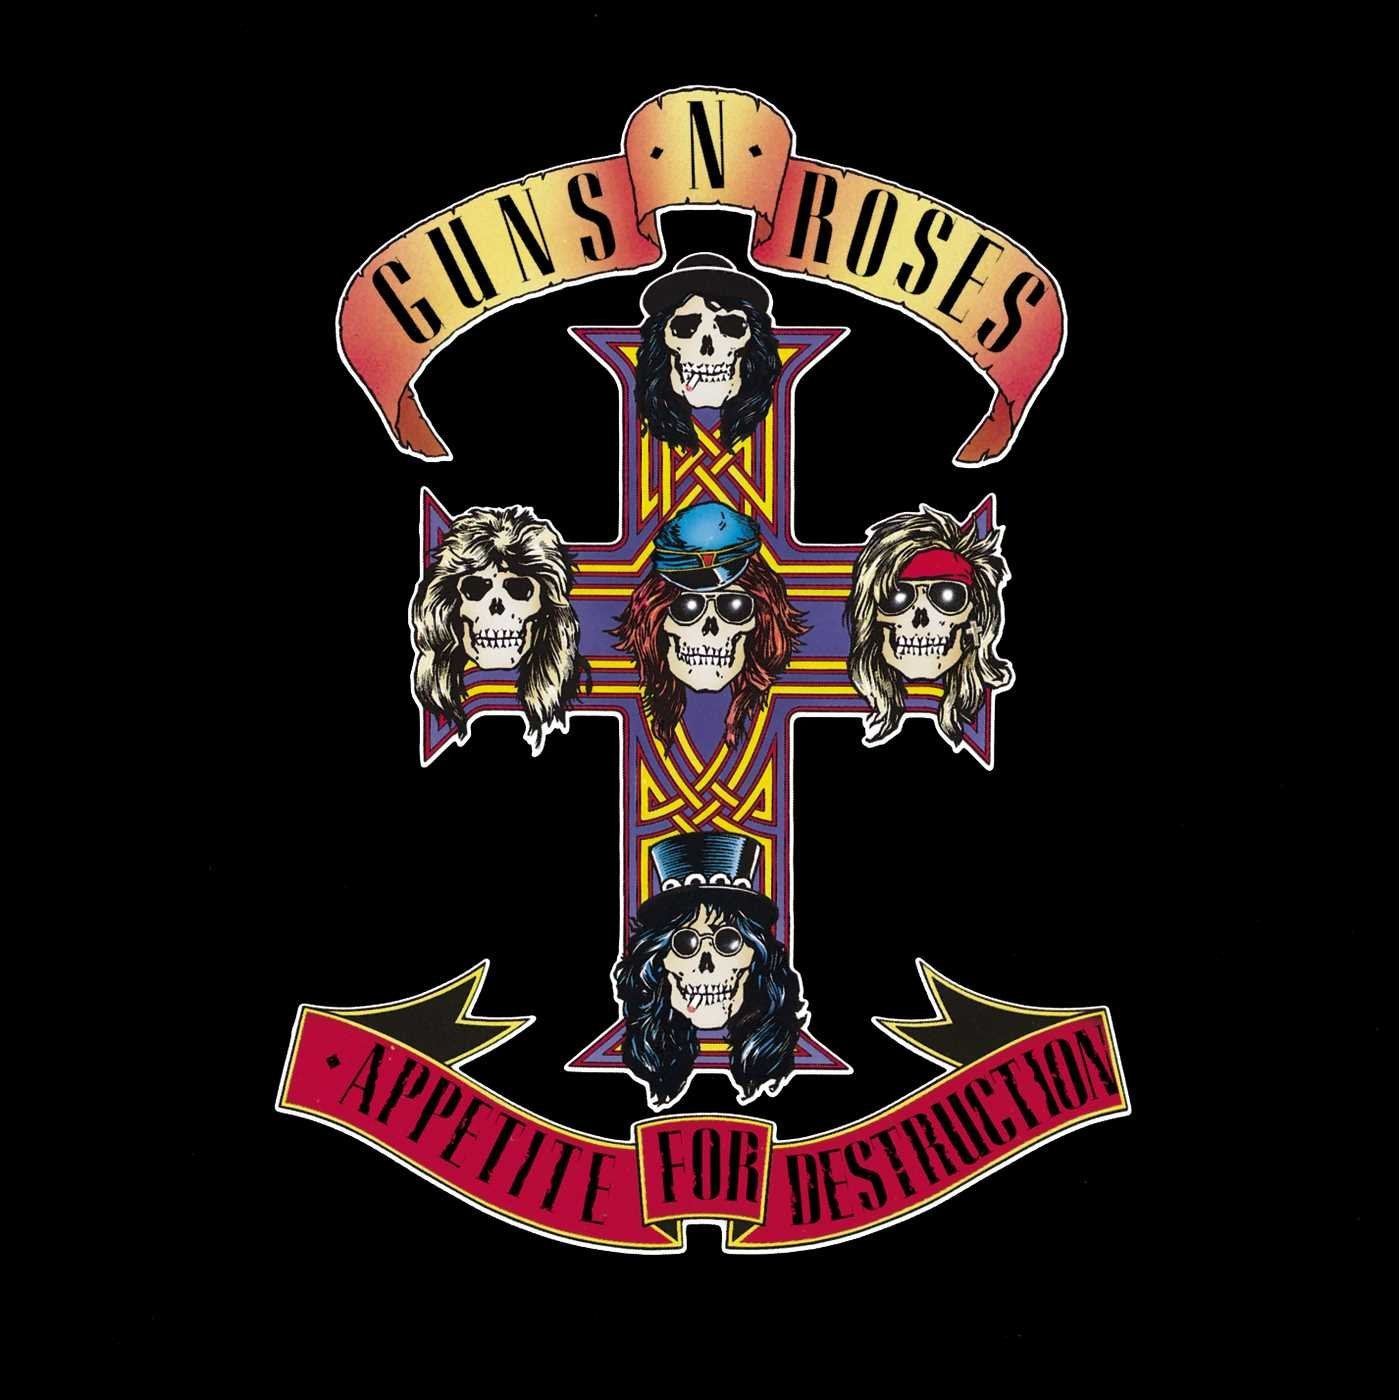 Guns N Roses | Appetite For Destruction [Explicit Content] (180 Gram Vinyl, Limited Edition, Digital Download Card) (2 Lp's) | Vinyl